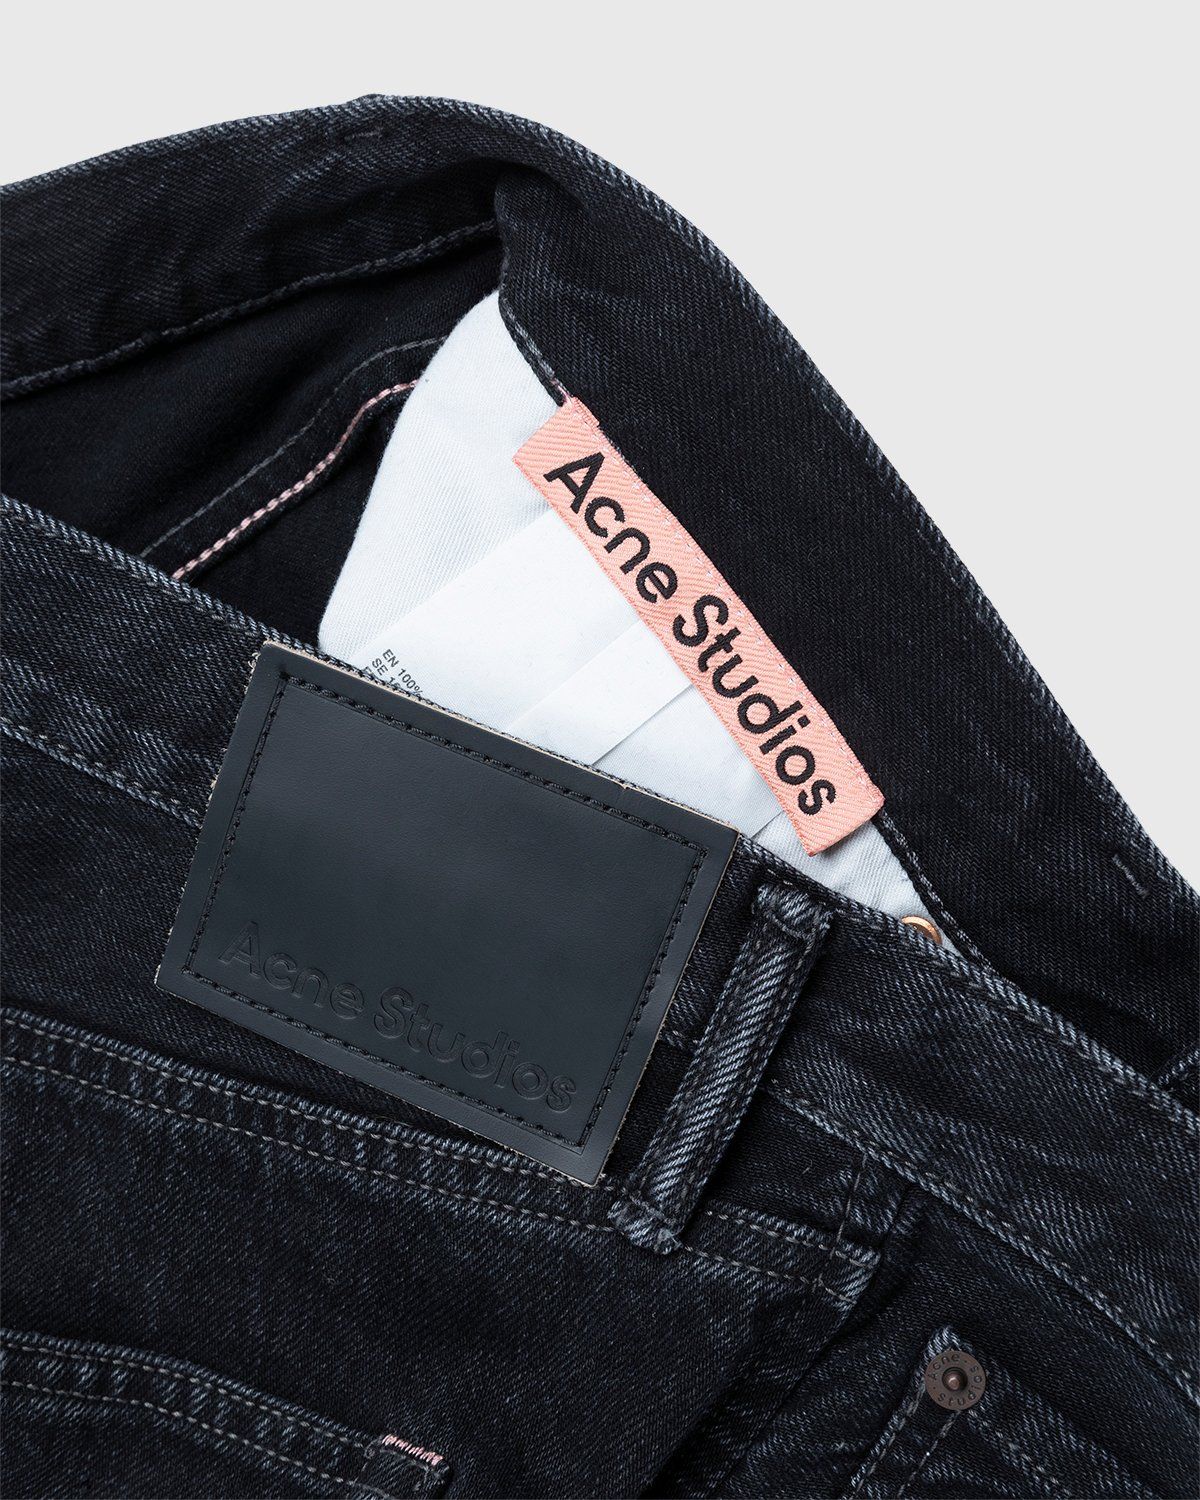 Acne Studios – Acne Studios 2003 Loose Fit Jeans Vintage Black - Denim - Black - Image 4